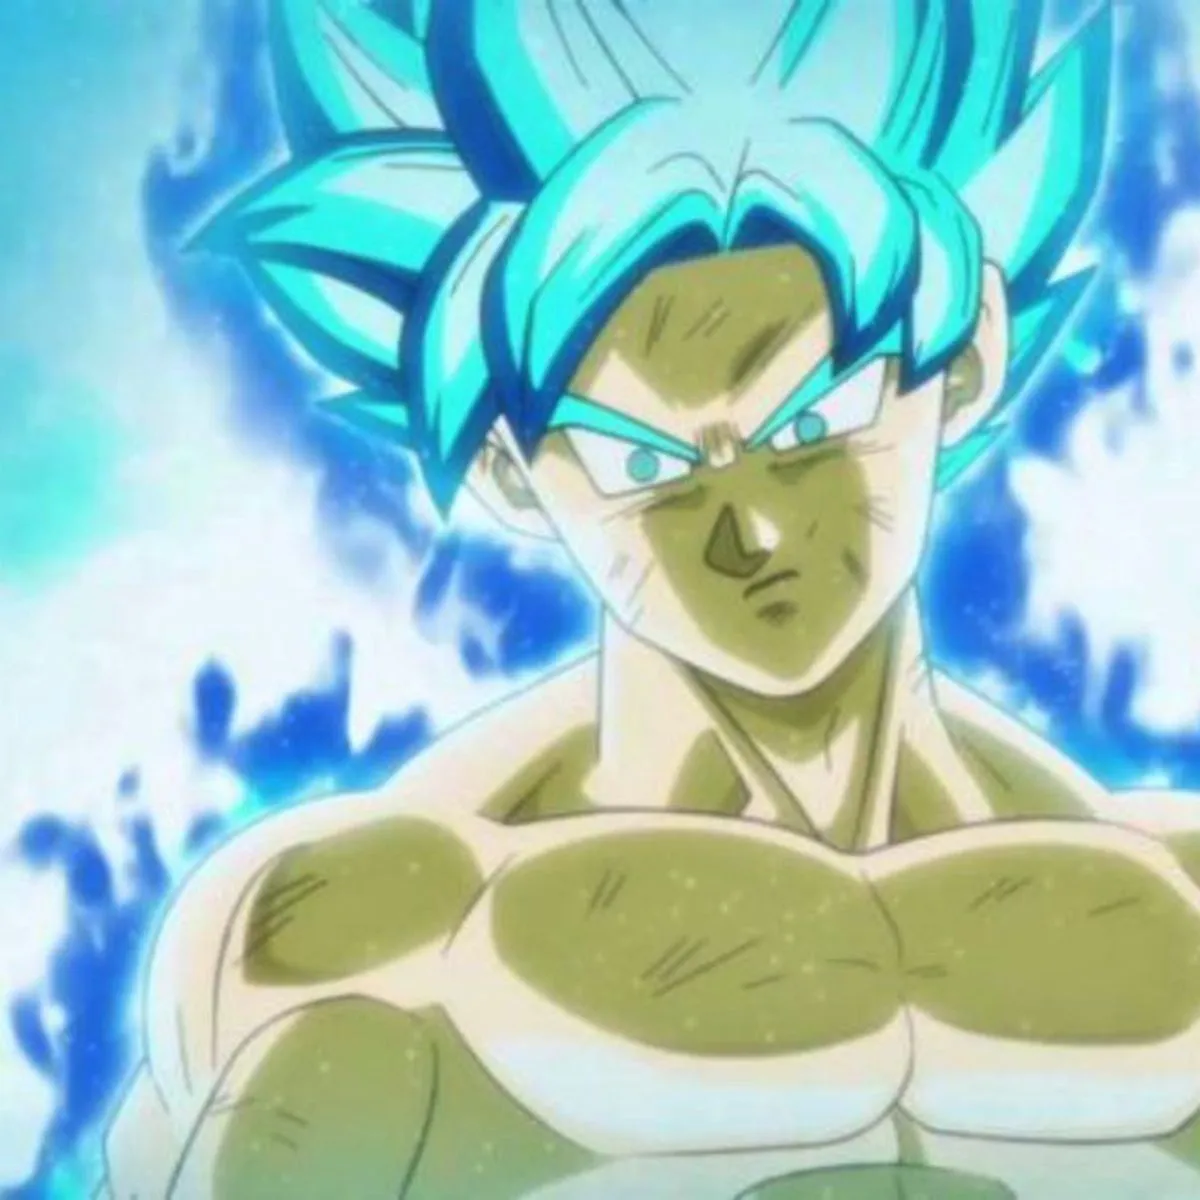 Dragon Ball: revelada la poderosa nueva transformación de Goku; nuevo nivel  - Meristation